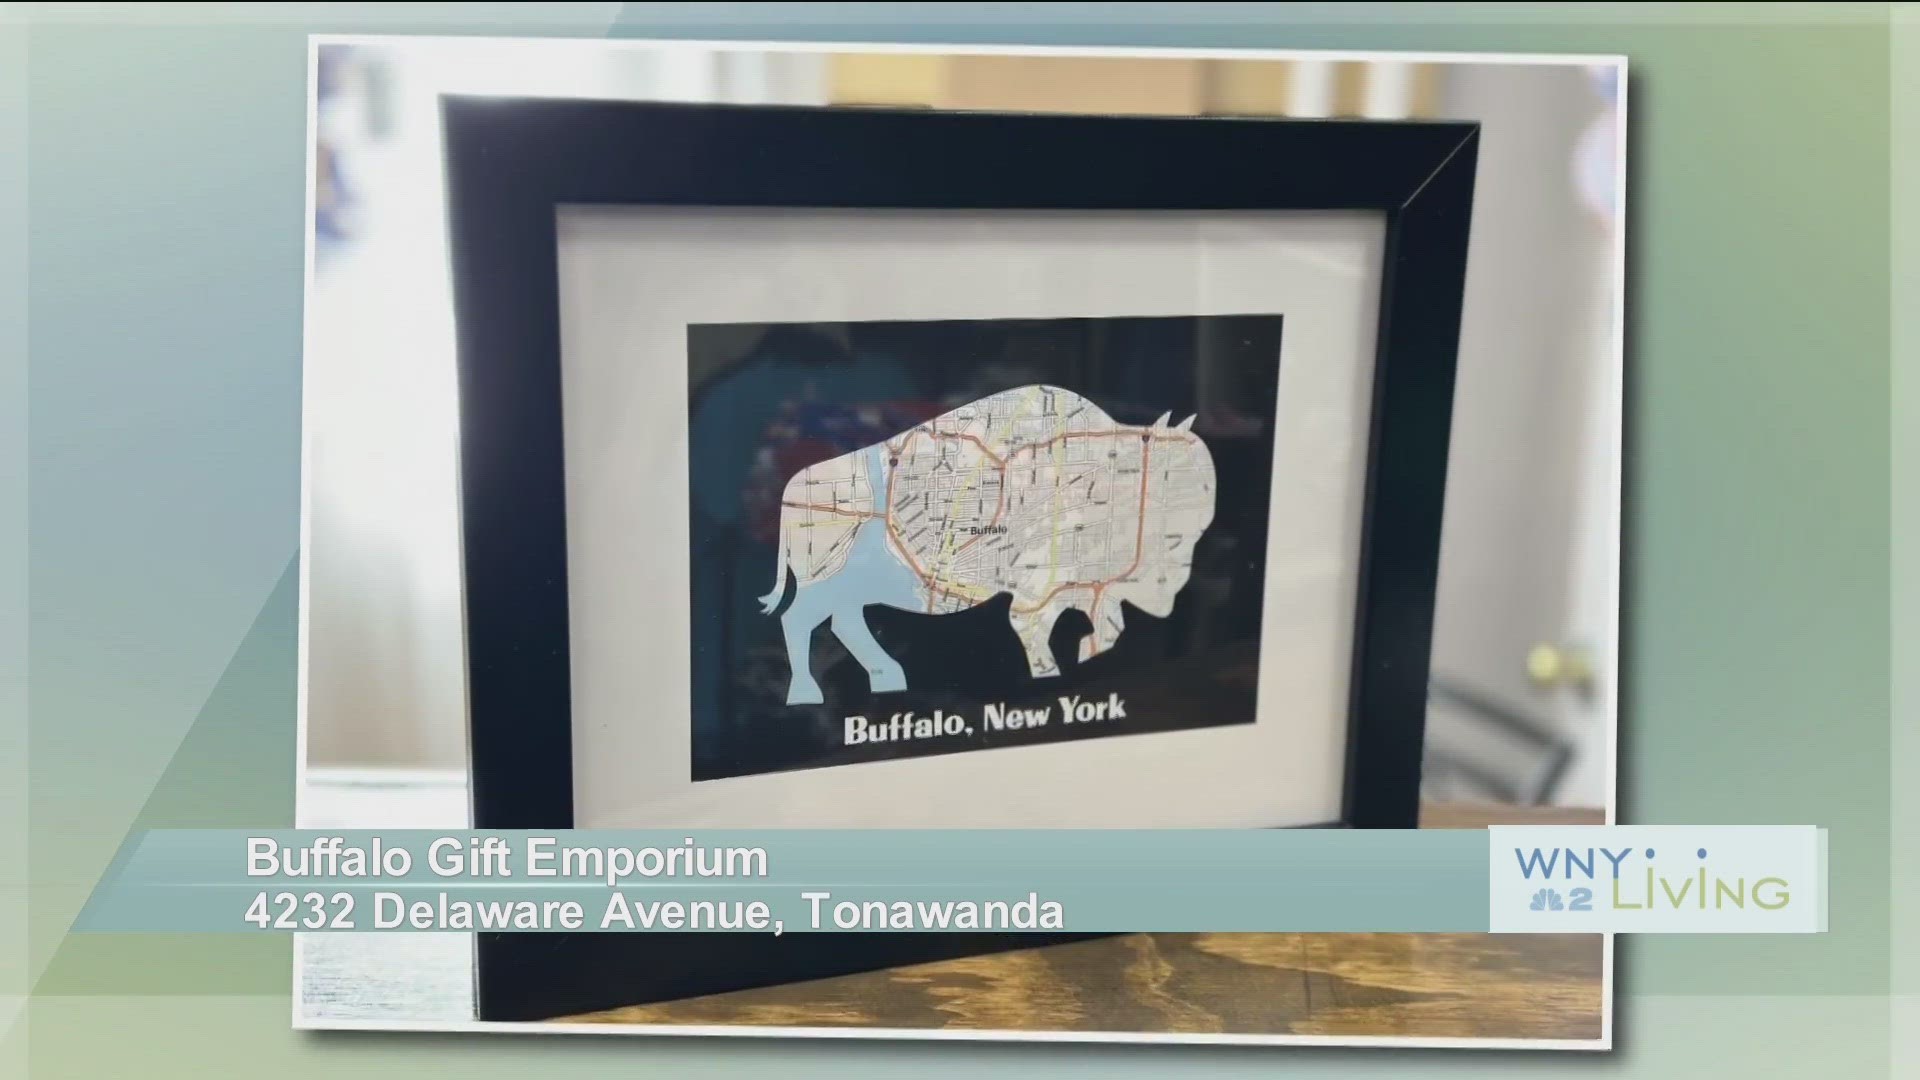 May 6th- WNY Living - Buffalo Gift Emporium (THIS VIDEO IS SPONSORED BY BUFFALO GIFT EMPORIUM)